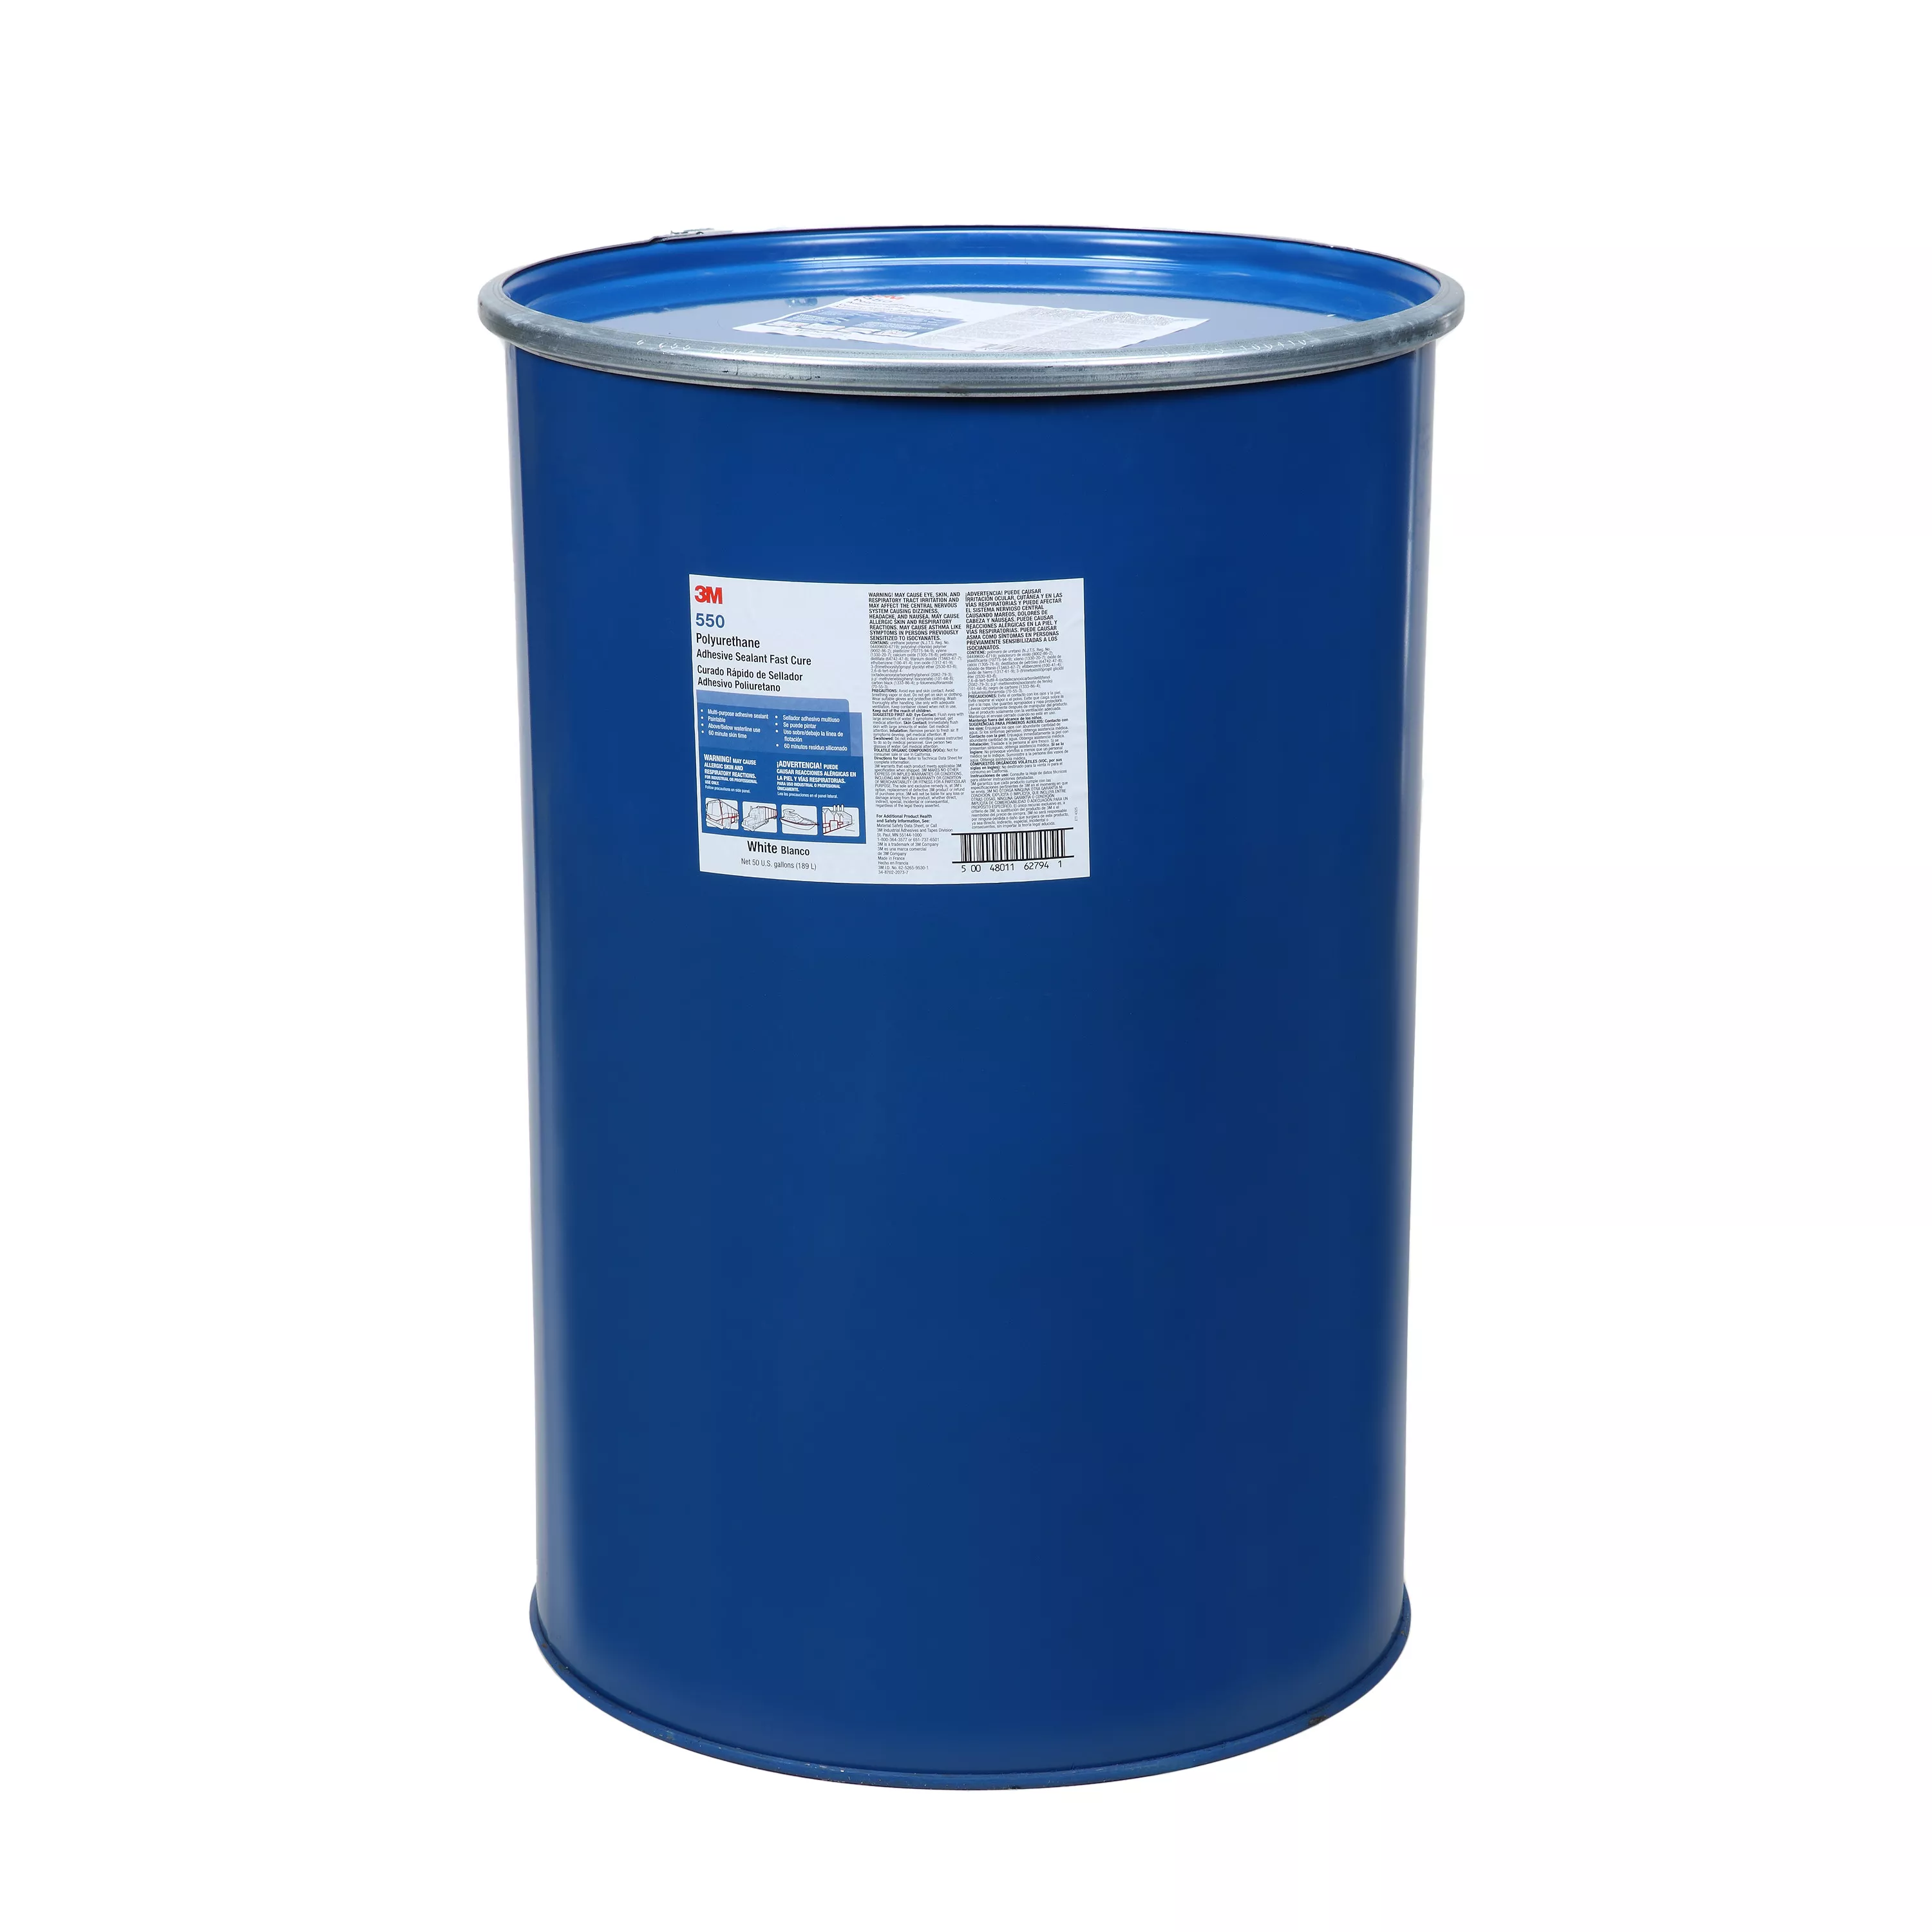 3M™ Polyurethane Adhesive Sealant 550FC, Fast Cure, White, 55 Gallon
Open
Head (50 Gallon Net), Drum